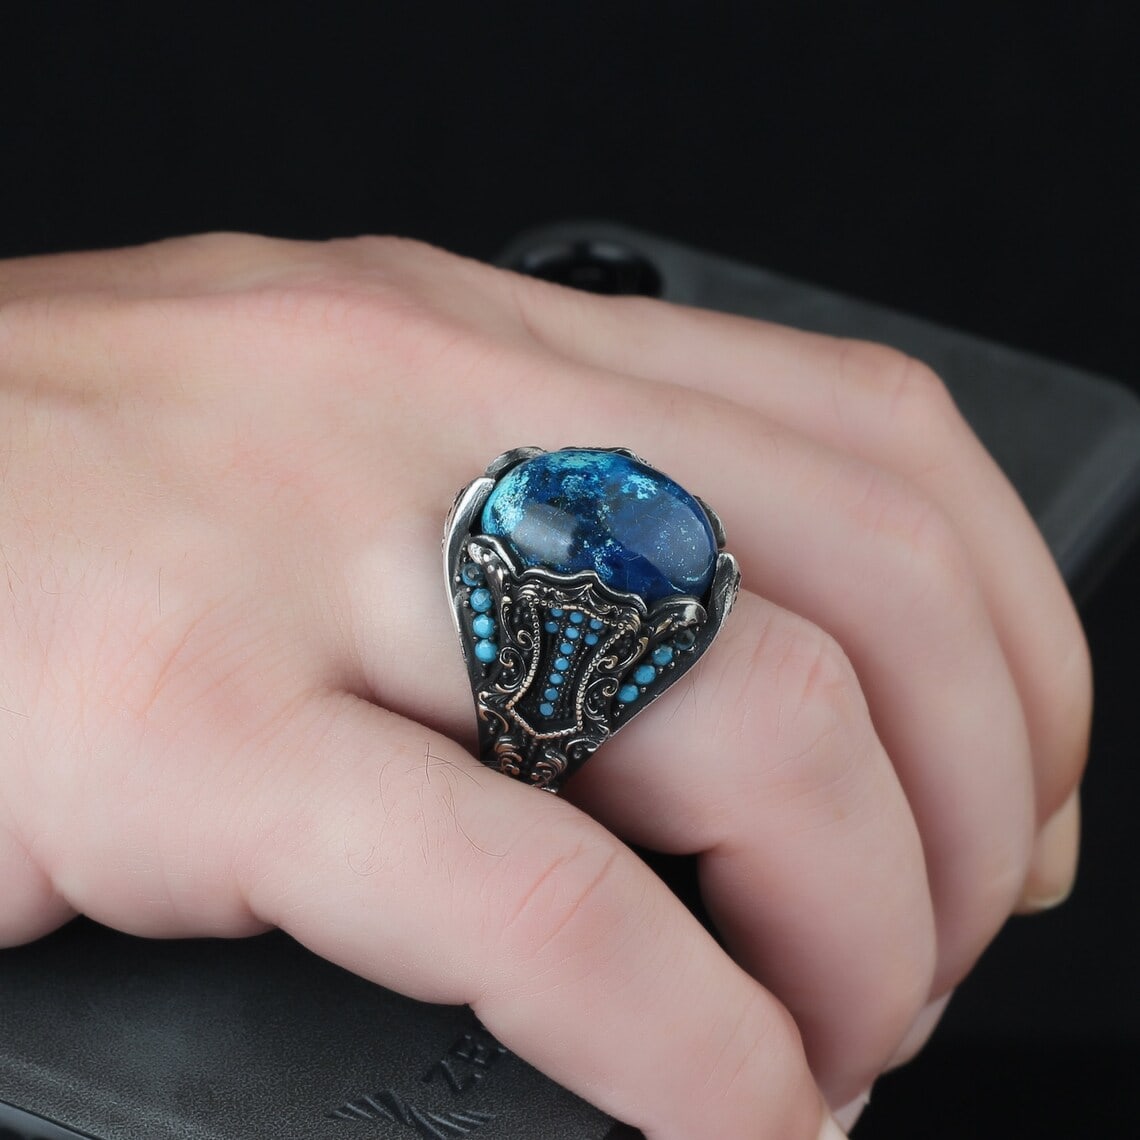 azurite gemstone ring on the finger